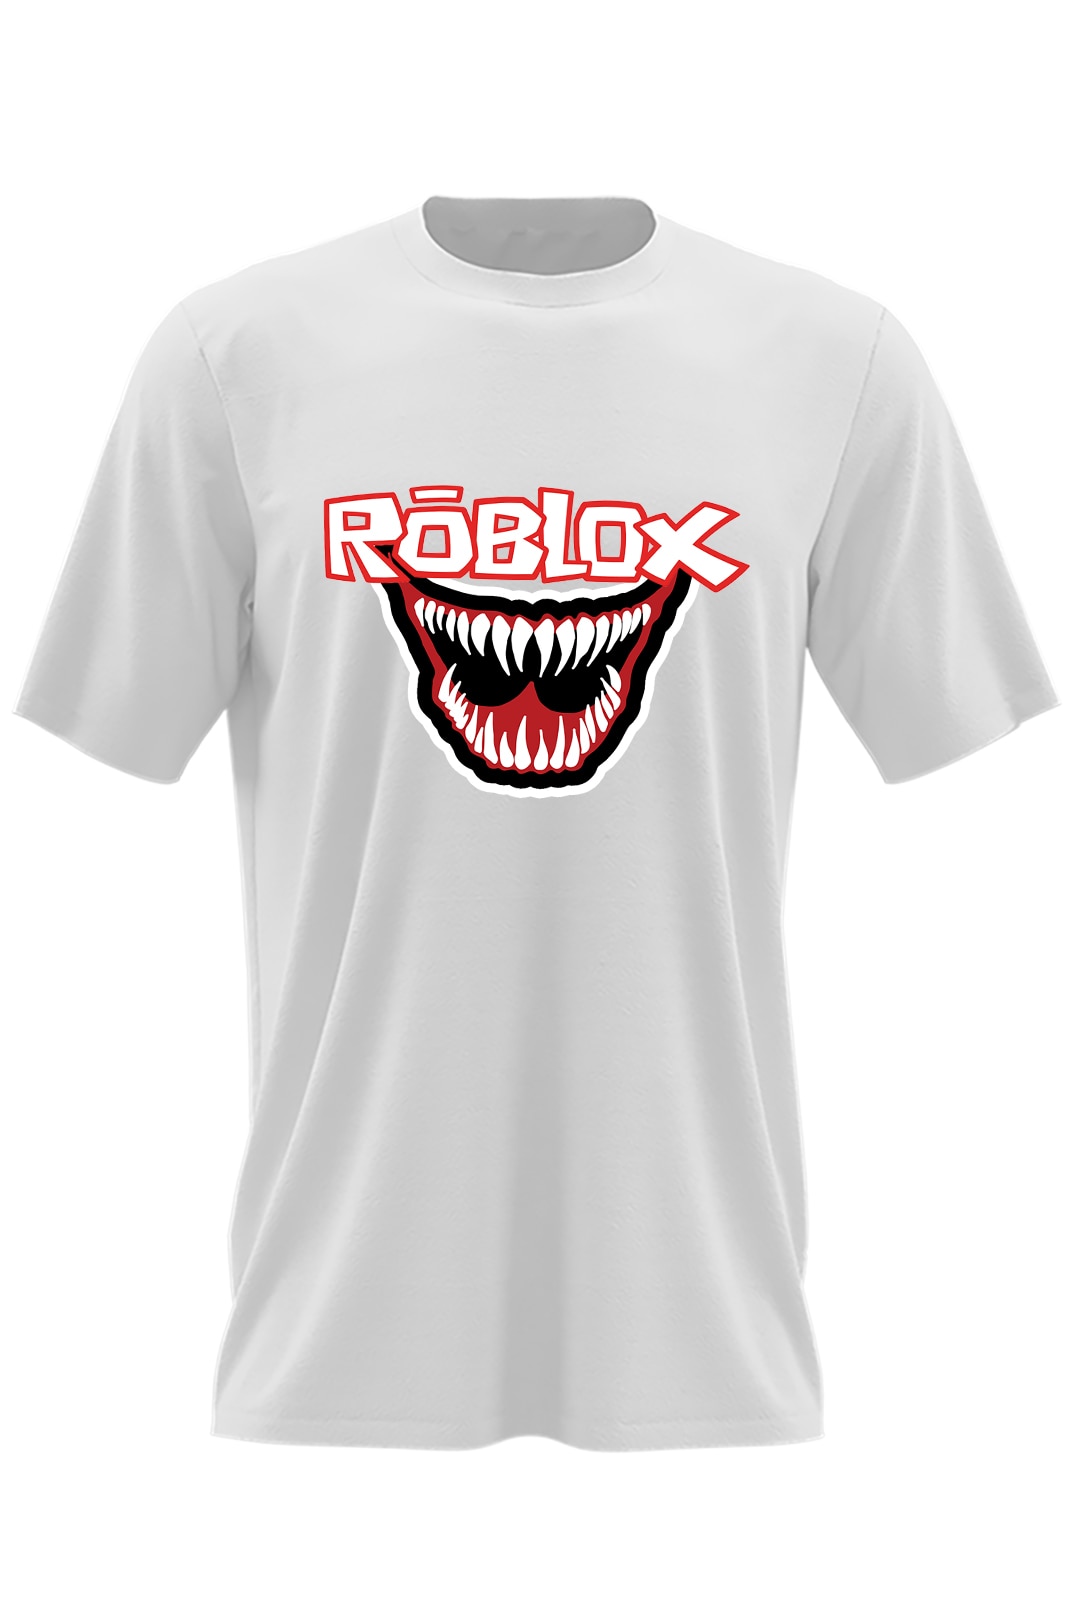 Tricou Venom Roblox SuperHero Smile, marime 3XL eMAG.ro